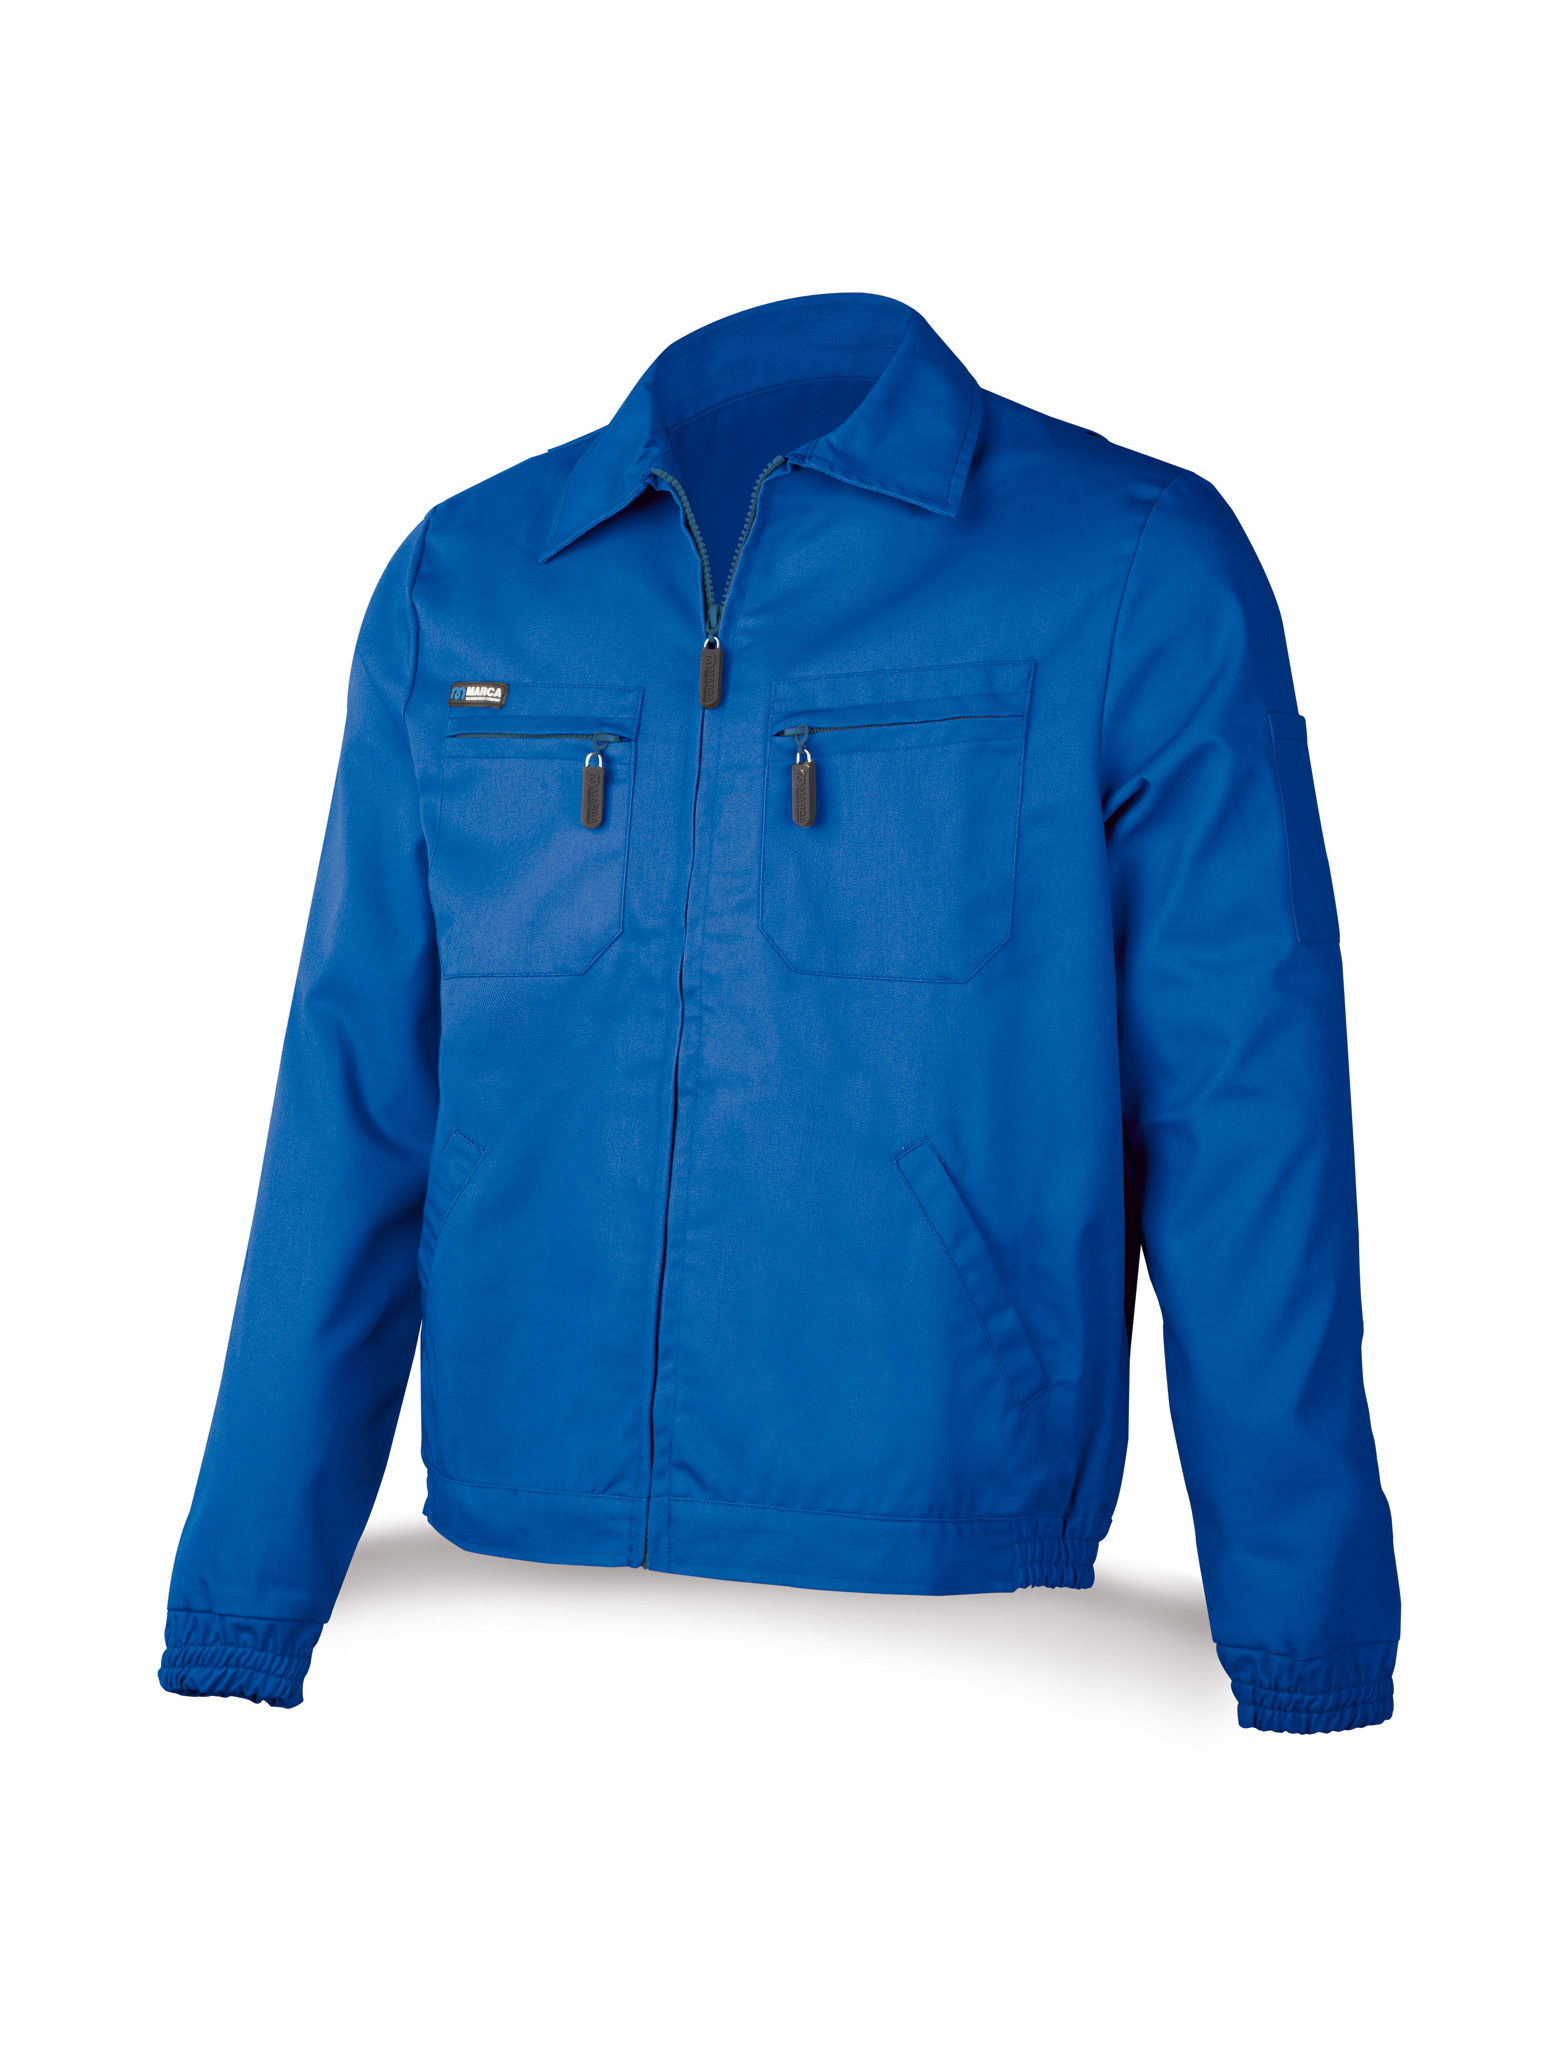 488-C Top Workwear Top Series 100% Cotton. Royal blue.